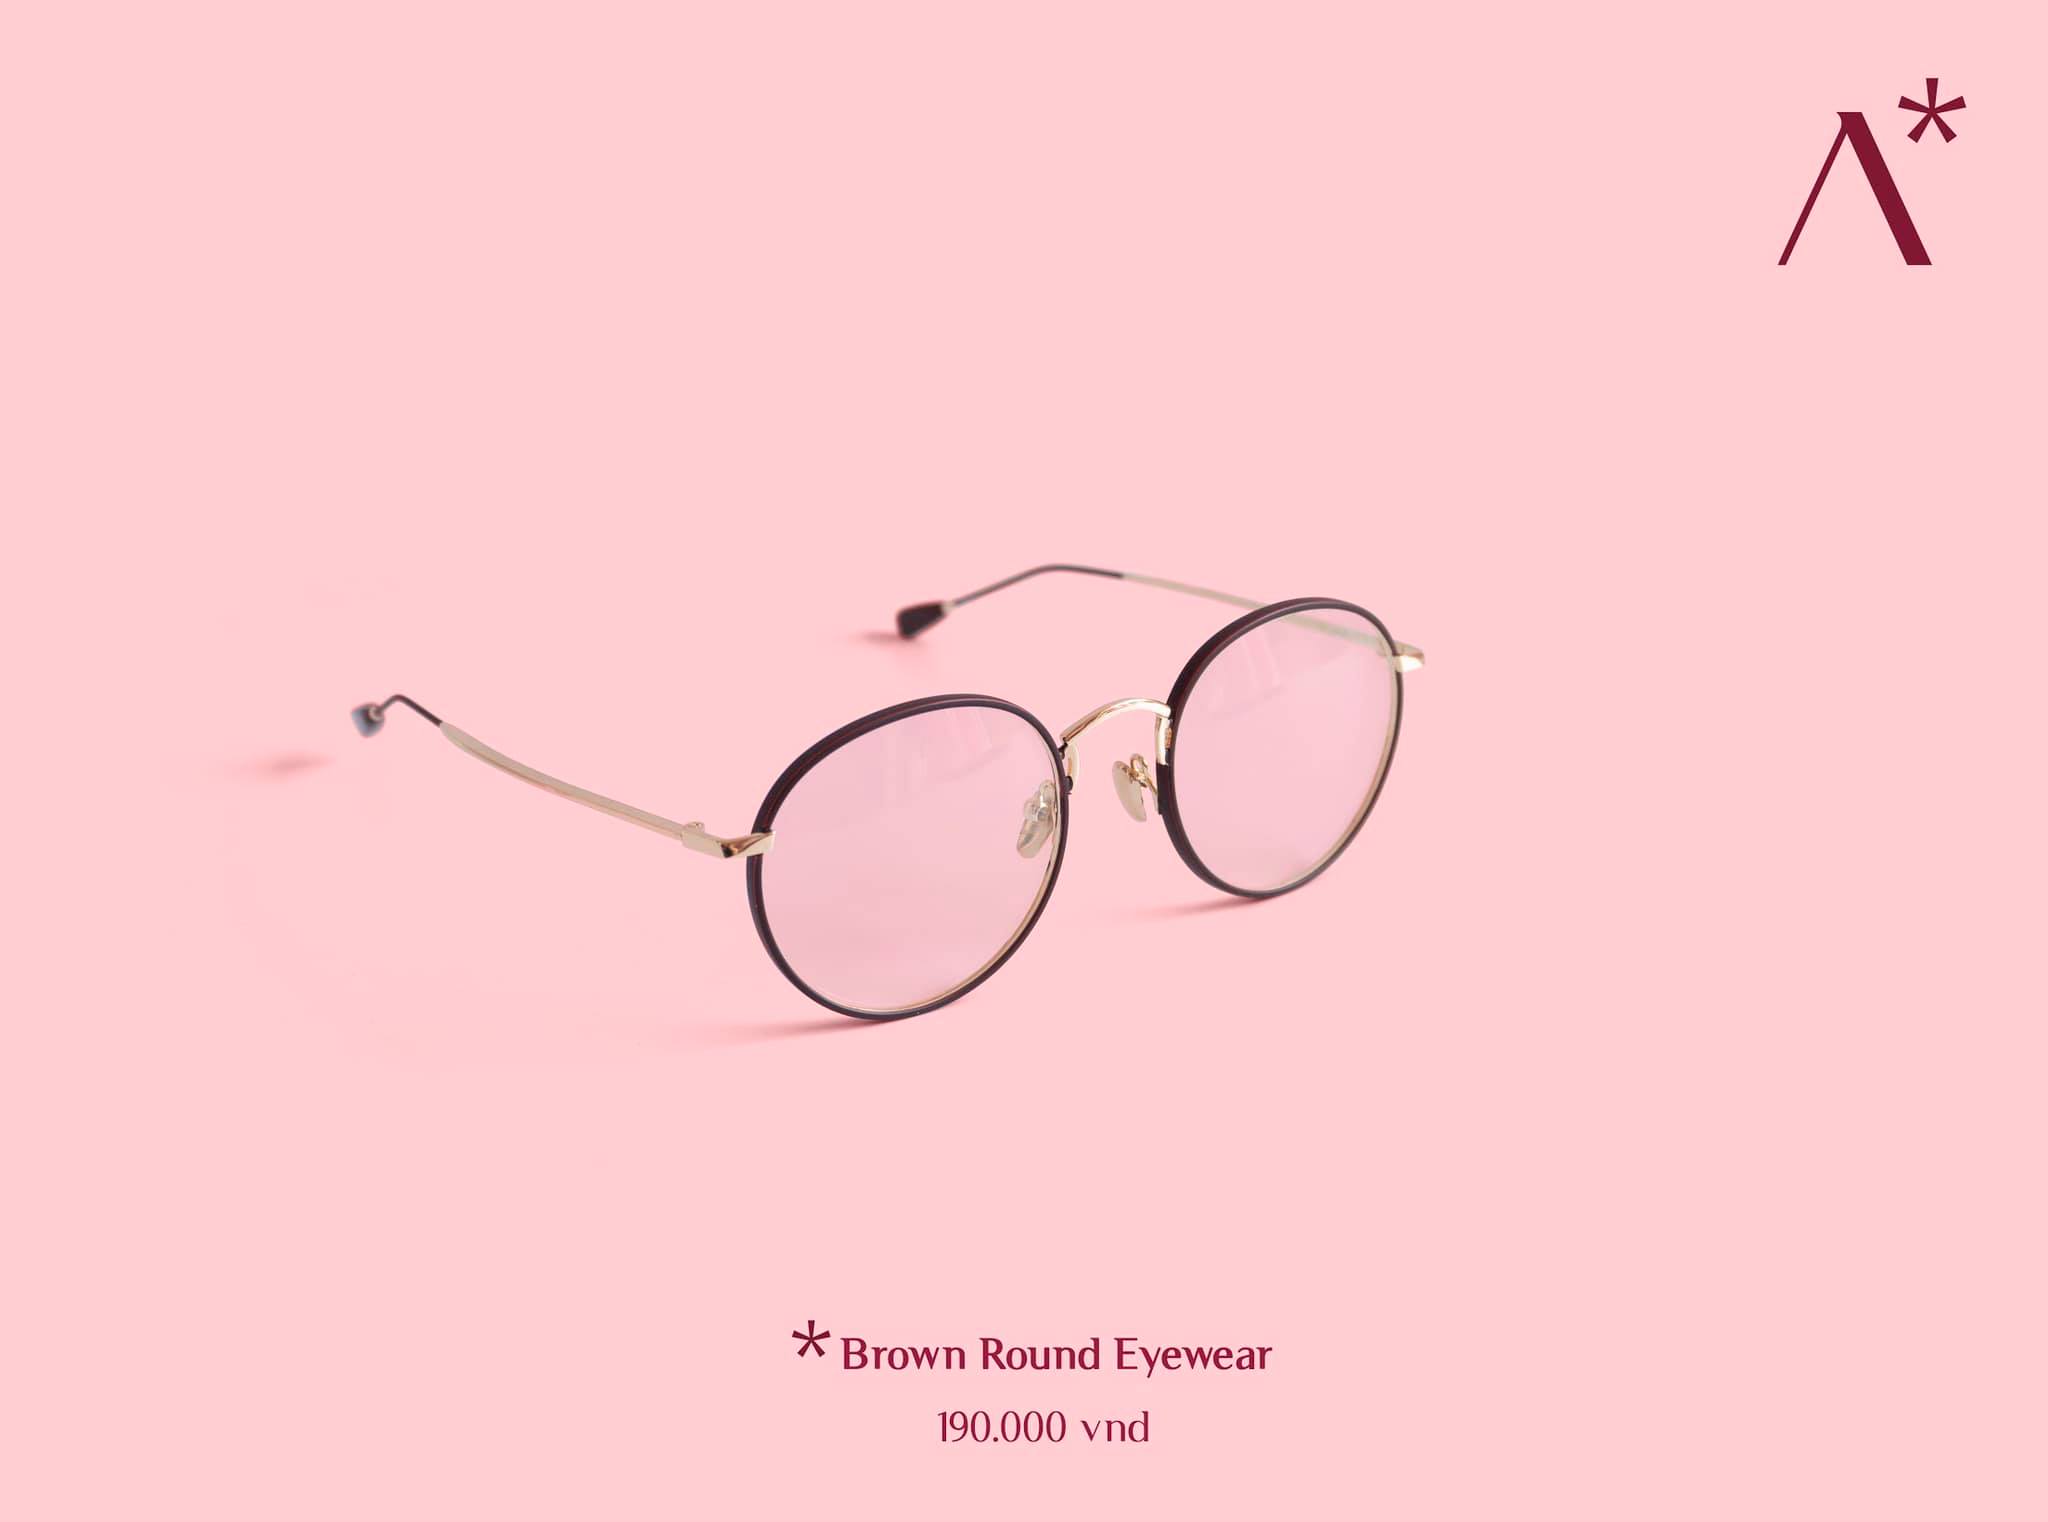 The Brown Round Eyewear